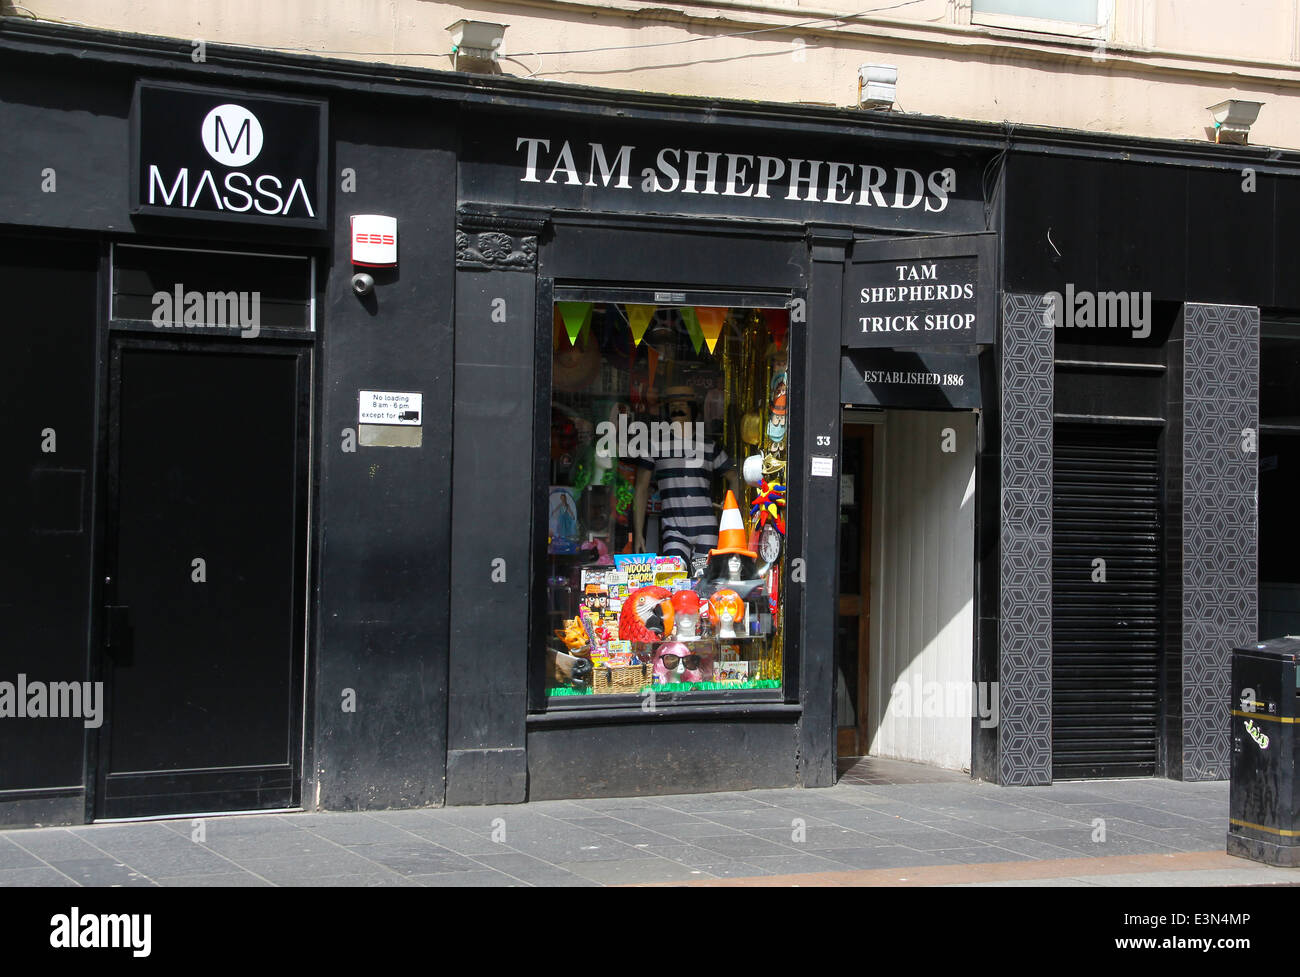 Tam Pastore trucco shop Queen Street Glasgow Foto Stock